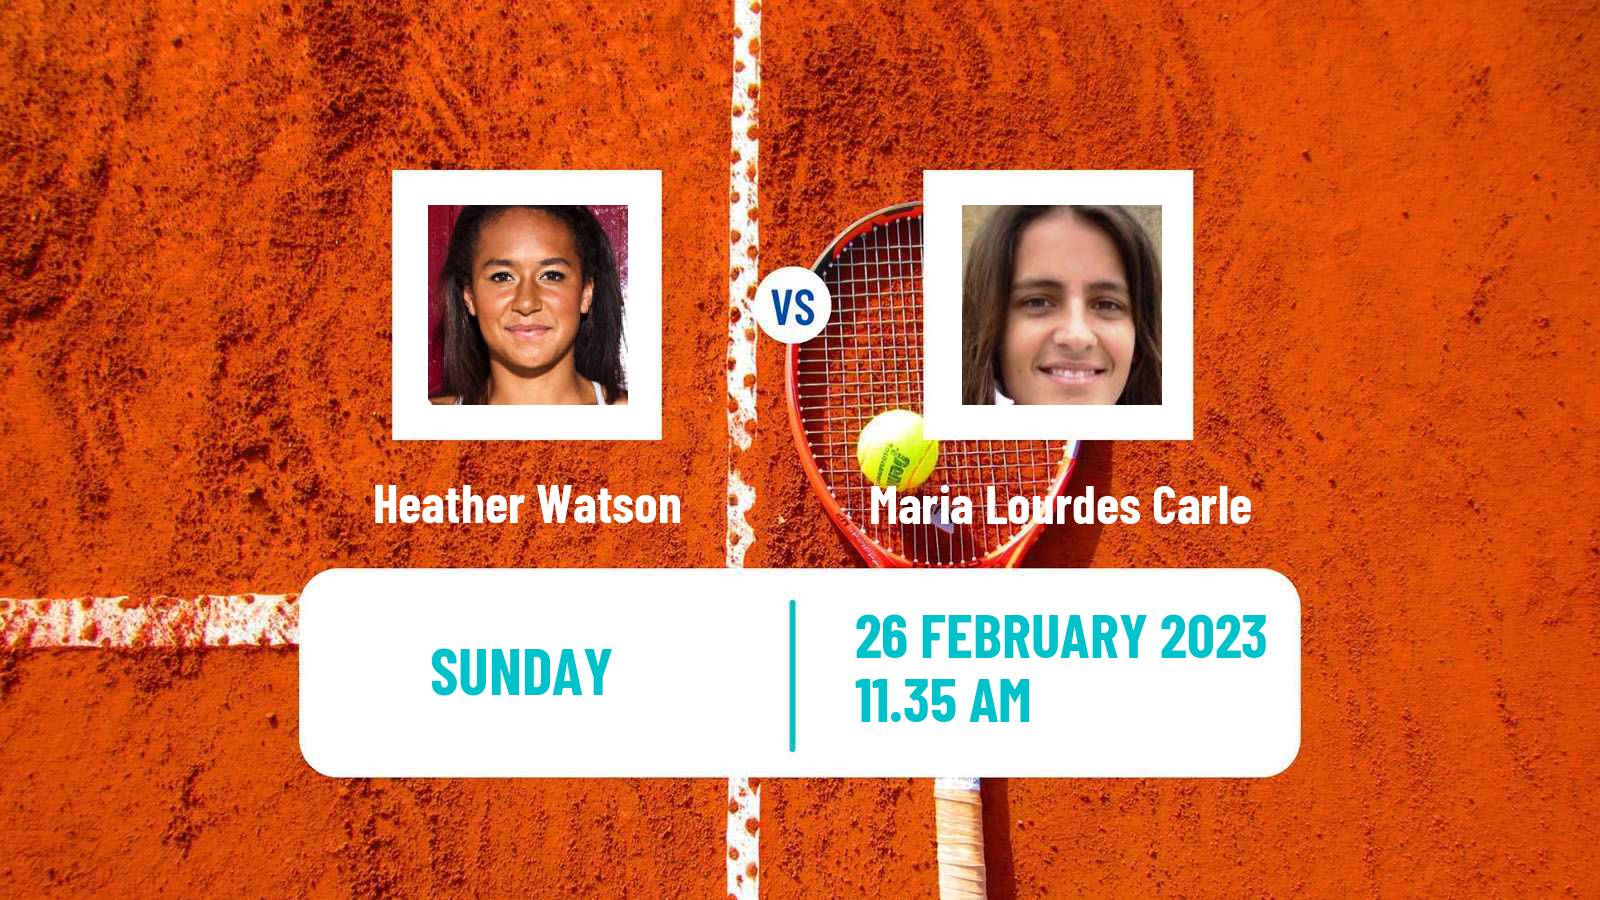 Tennis WTA Austin Heather Watson - Maria Lourdes Carle